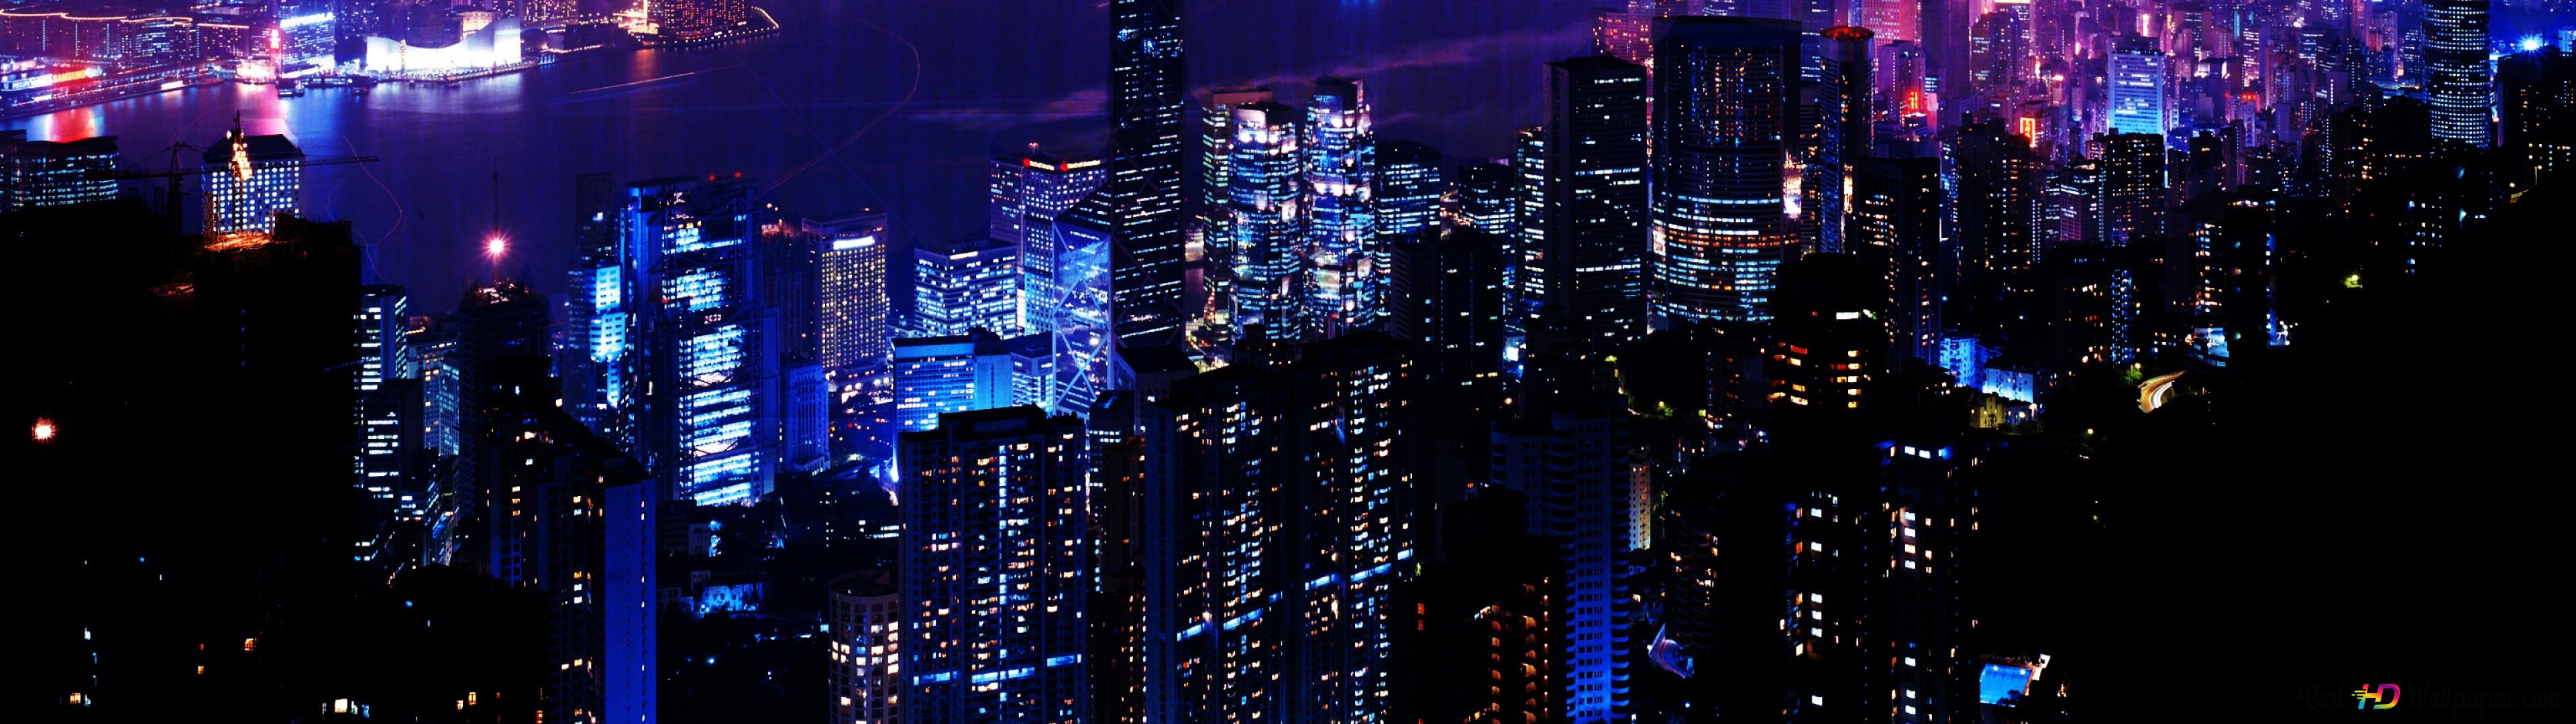 City Night 4K wallpaper download